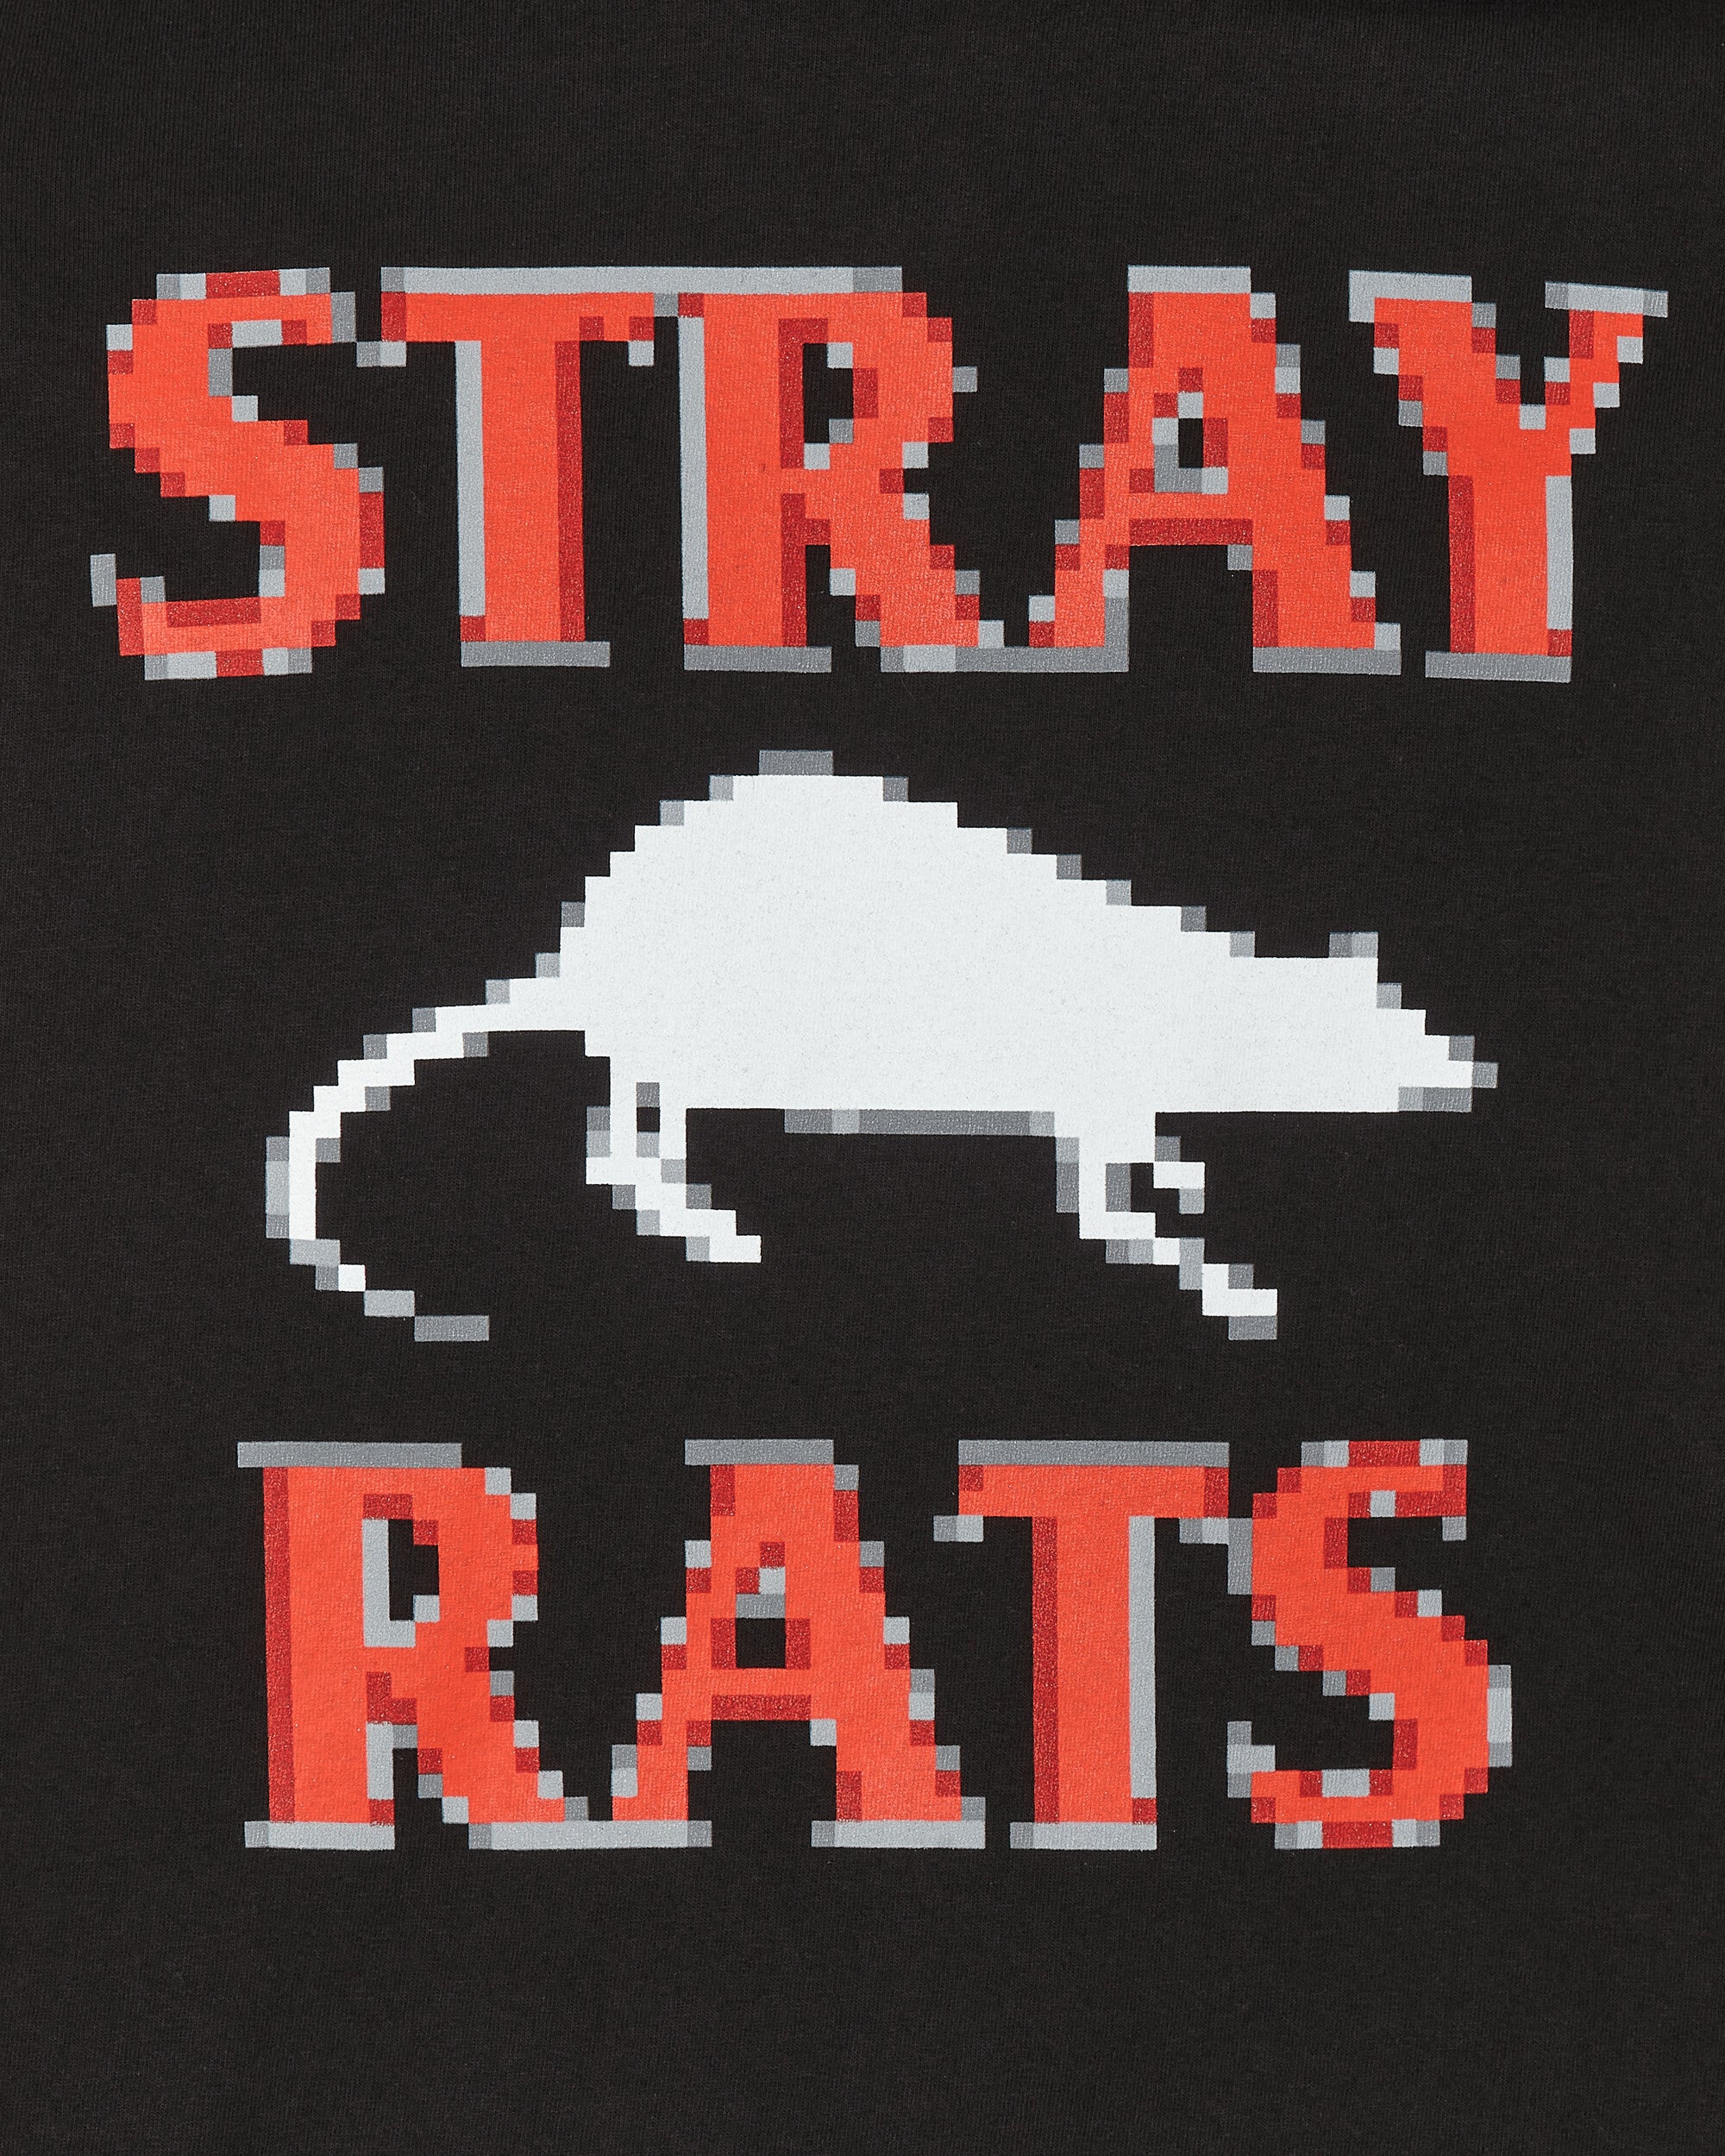 Stray Rats Pixel Rodenticide Tee Black T-Shirts Shortsleeve SRT1196 BLACK